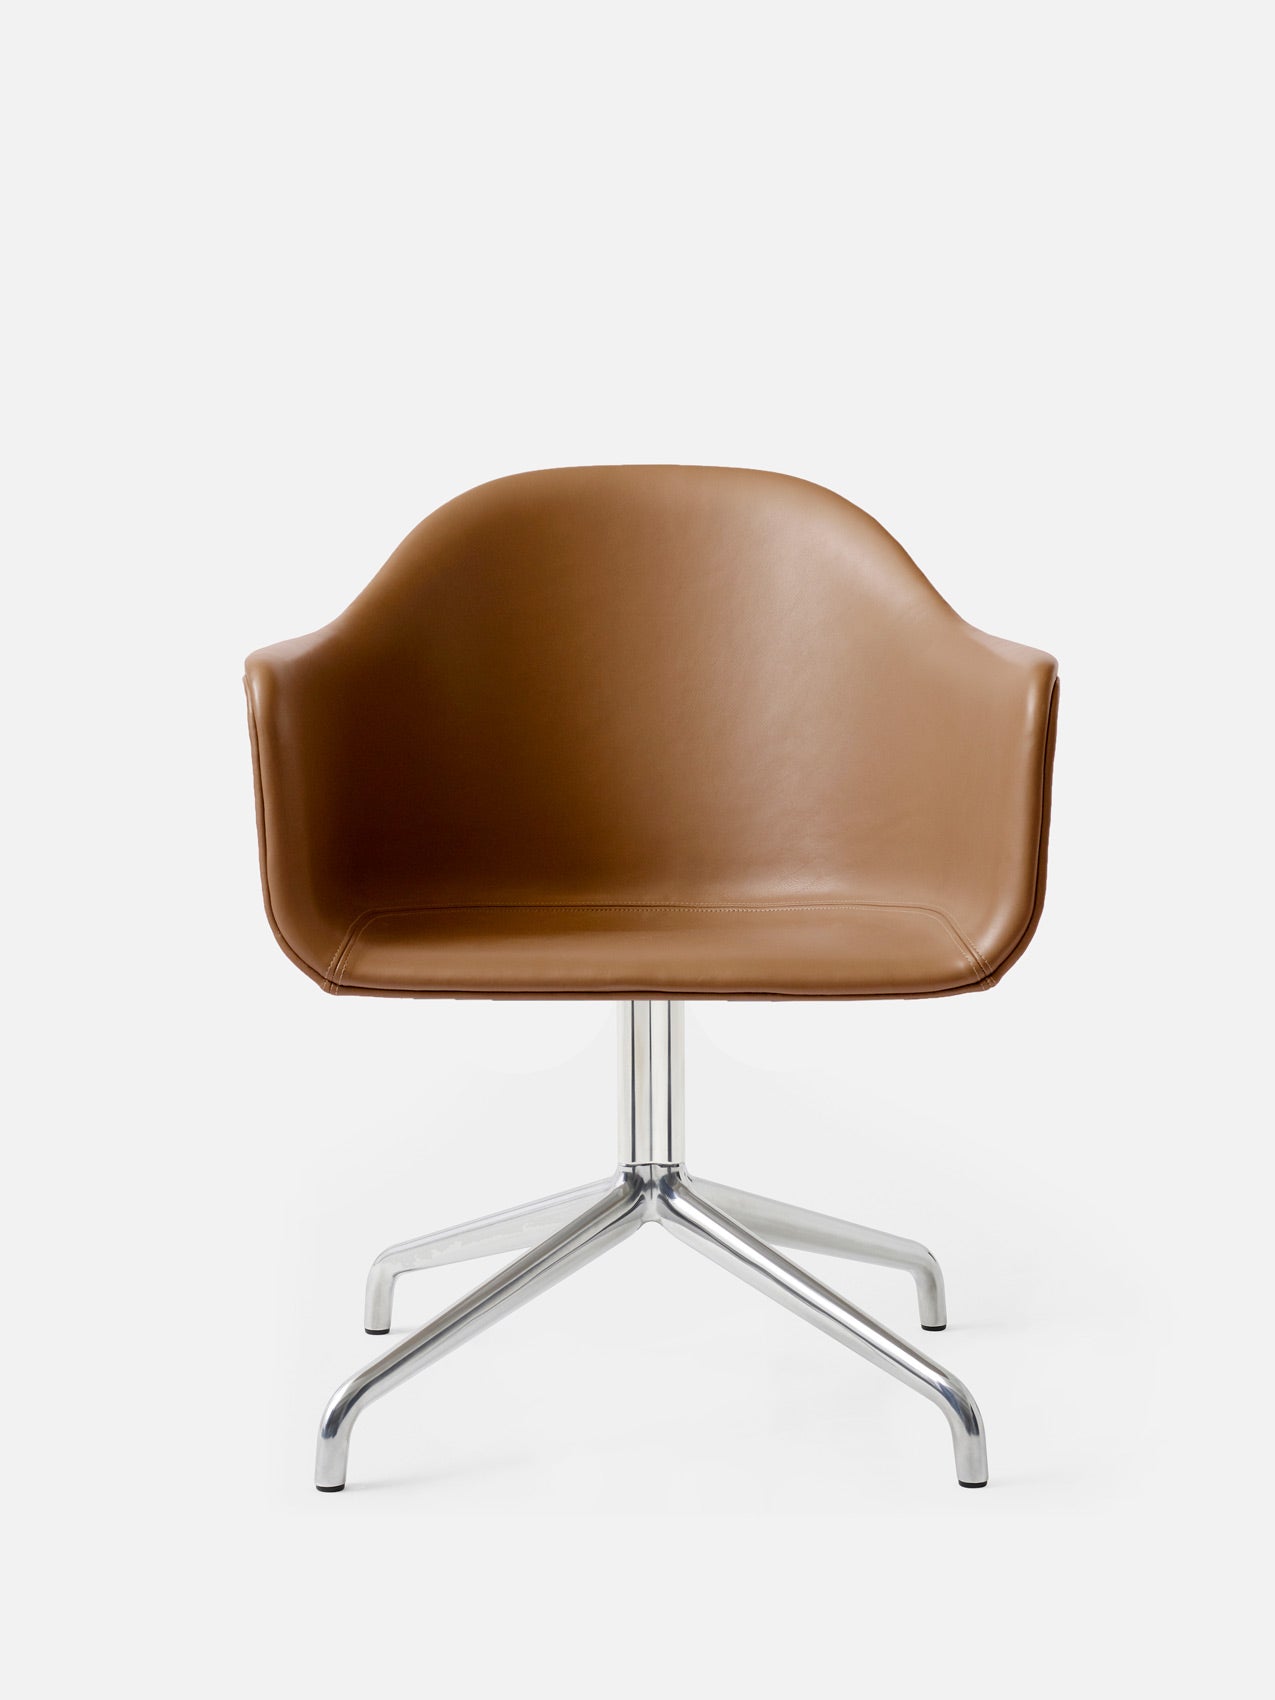 Harbour Arm Chair, Upholstered-Chair-Norm Architects-Star Base (Seat 17.7in H)/Polished Aluminum-0250 Cognac/Dakar-menu-minimalist-modern-danish-design-home-decor